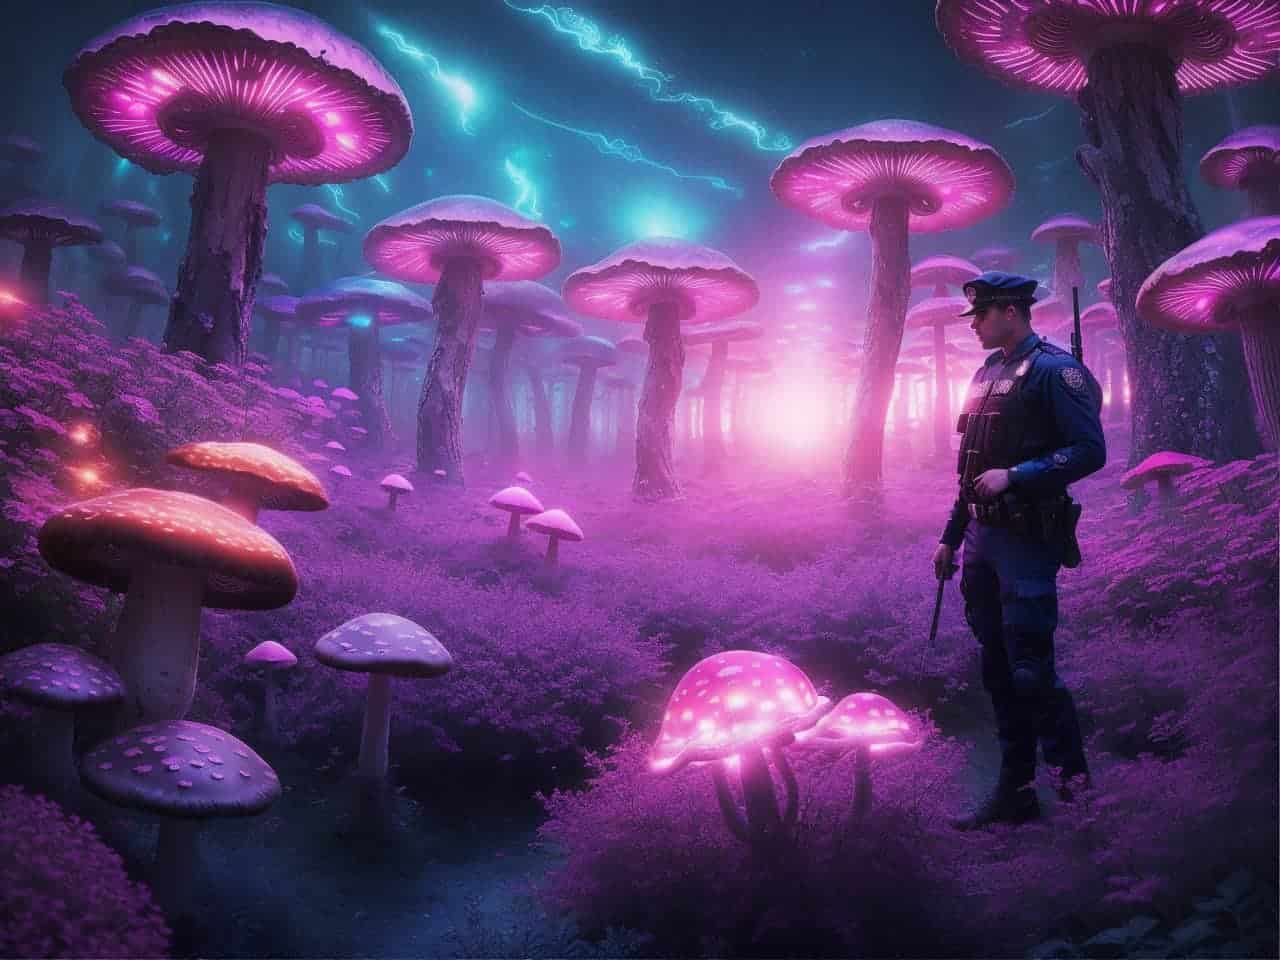 Police officer standing in mushroom forest